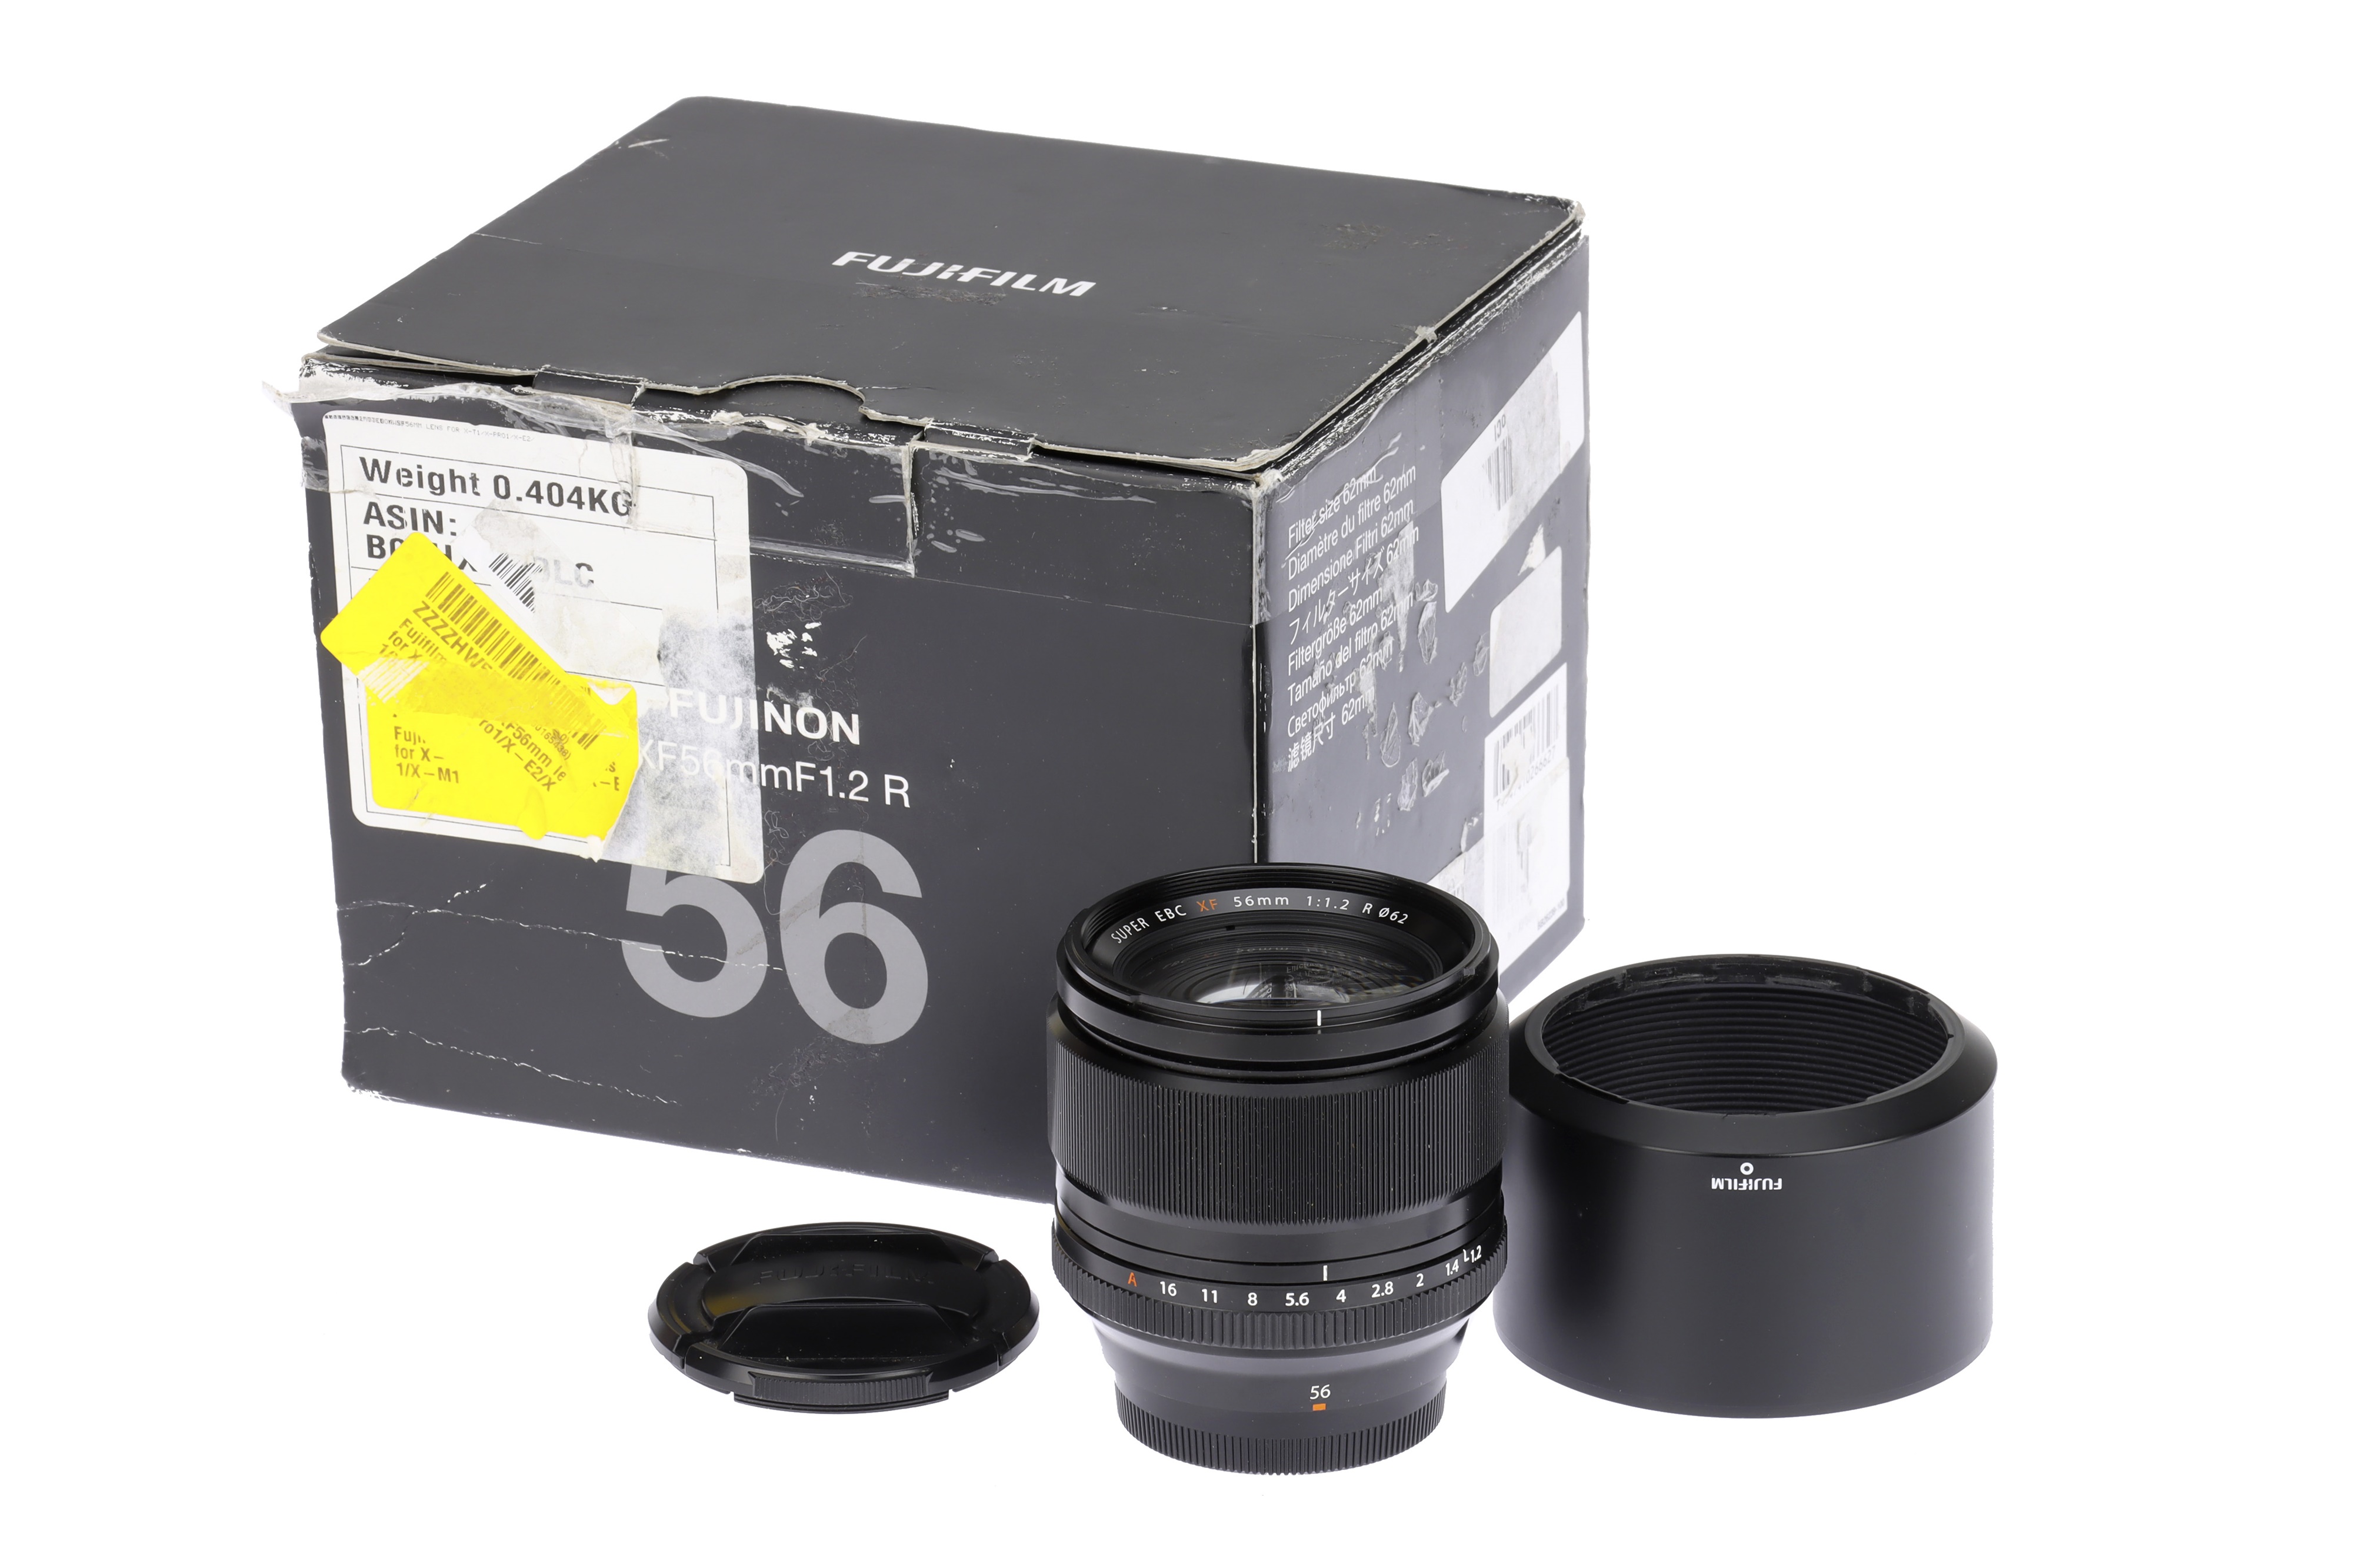 A Fujifilm Fujinon Super EBC XF f/1.2R 56mm Aspherical Lens